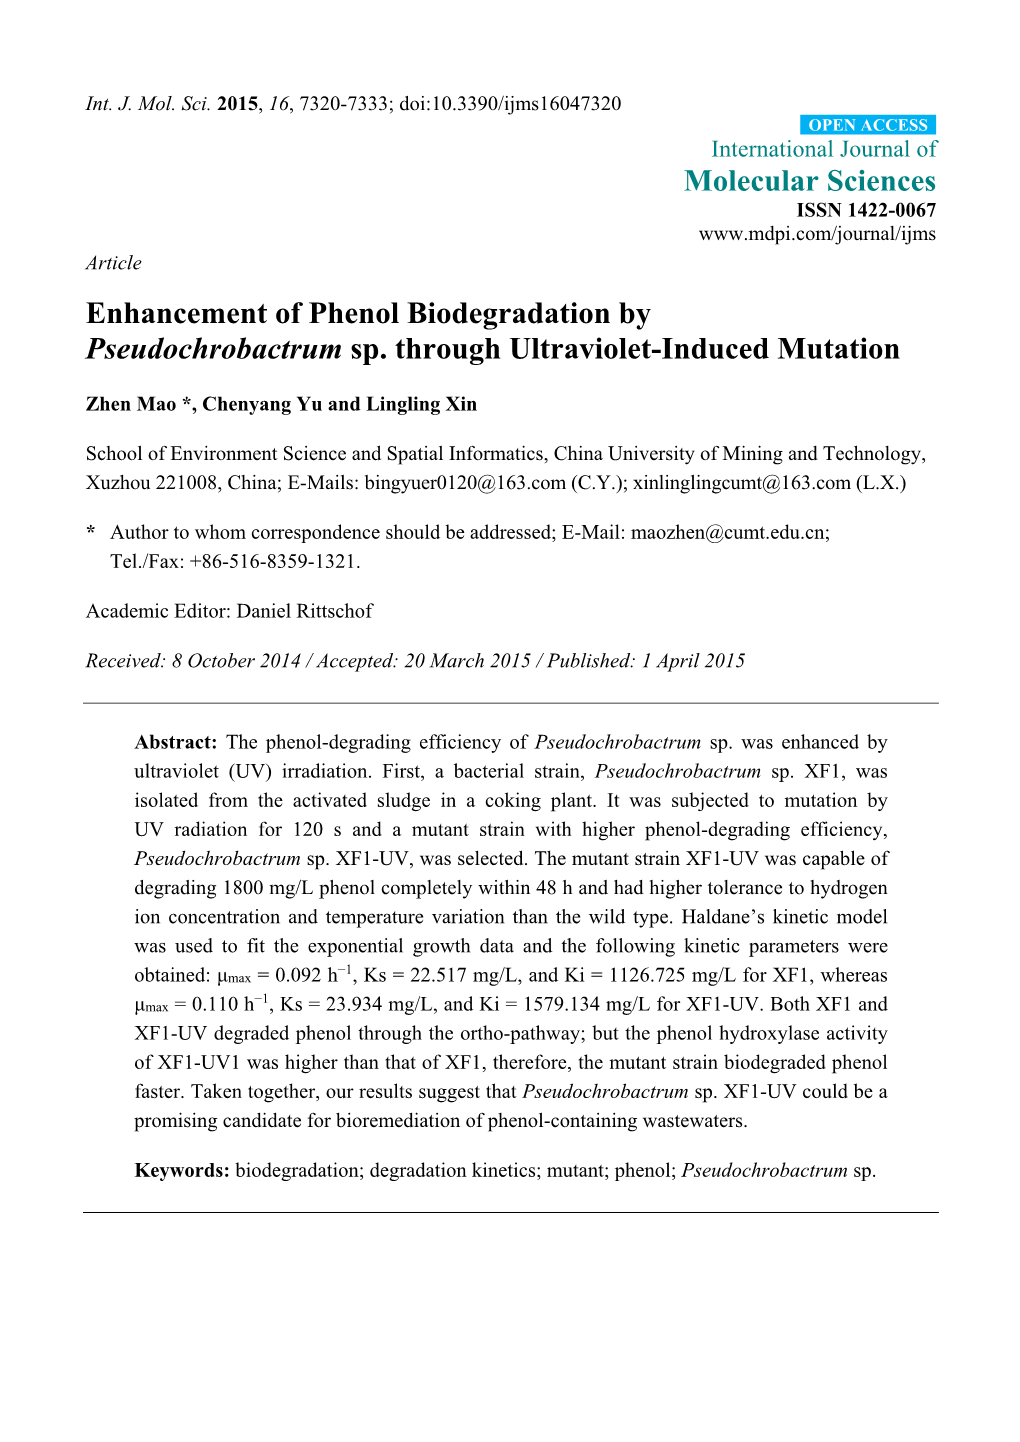 Enhancement of Phenol Biodegradation by Pseudochrobactrum Sp